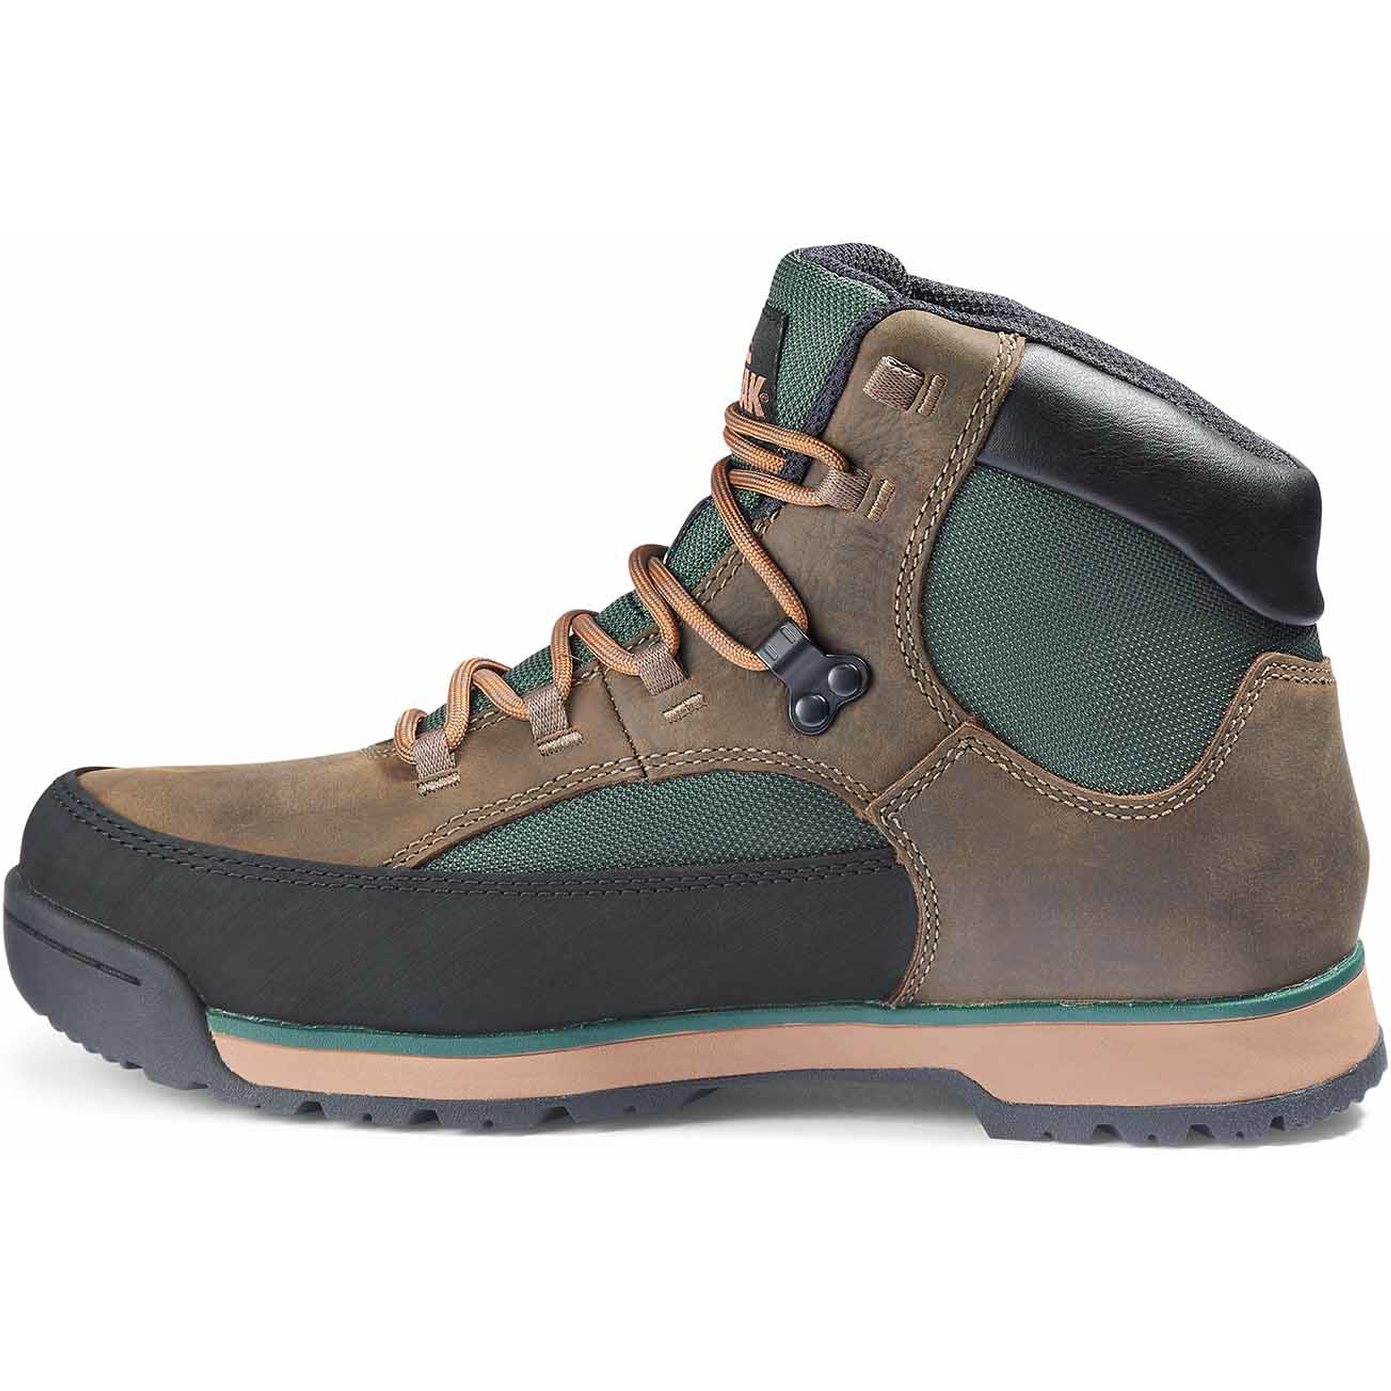 Kodiak Men's Greb Classic Steel Toe WP Hiker Safety Work Boot - Fossil 834XFS  - Overlook Boots